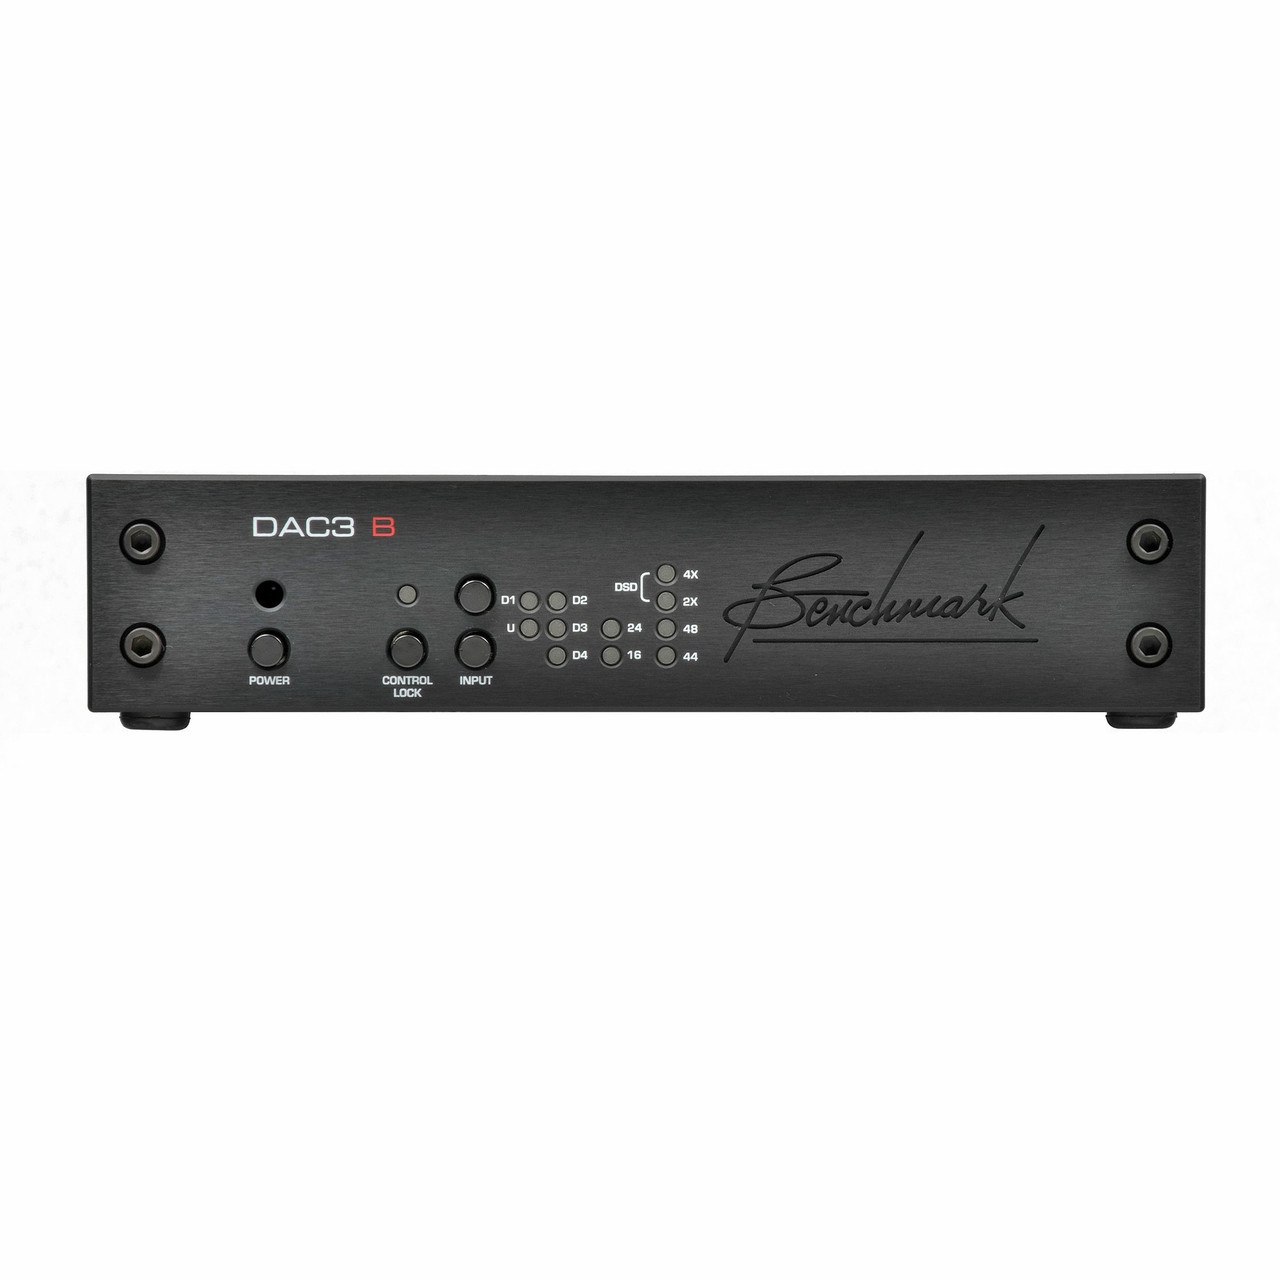 Benchmark DAC2 HGC - Digital to Analog Audio Converter